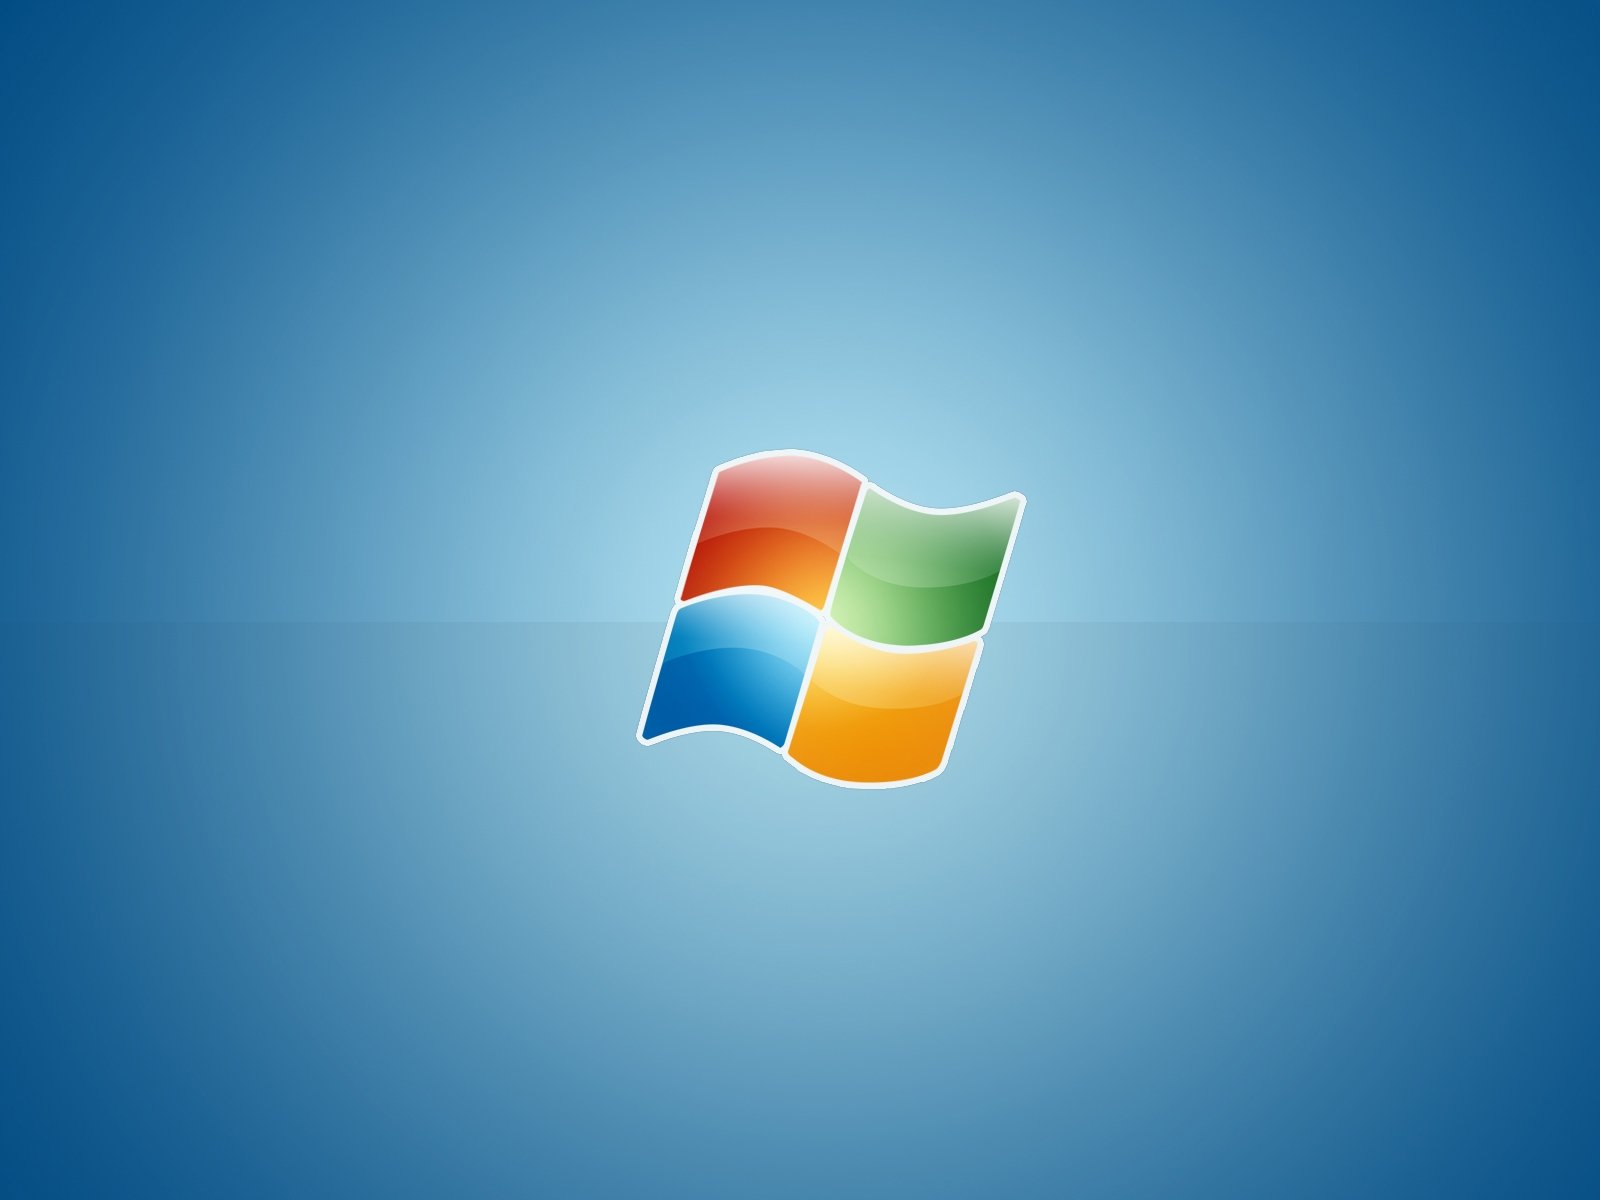 Hd 1600x1200 Big Windows Logo Desktop Wallpapers Backgrounds 1600x1200